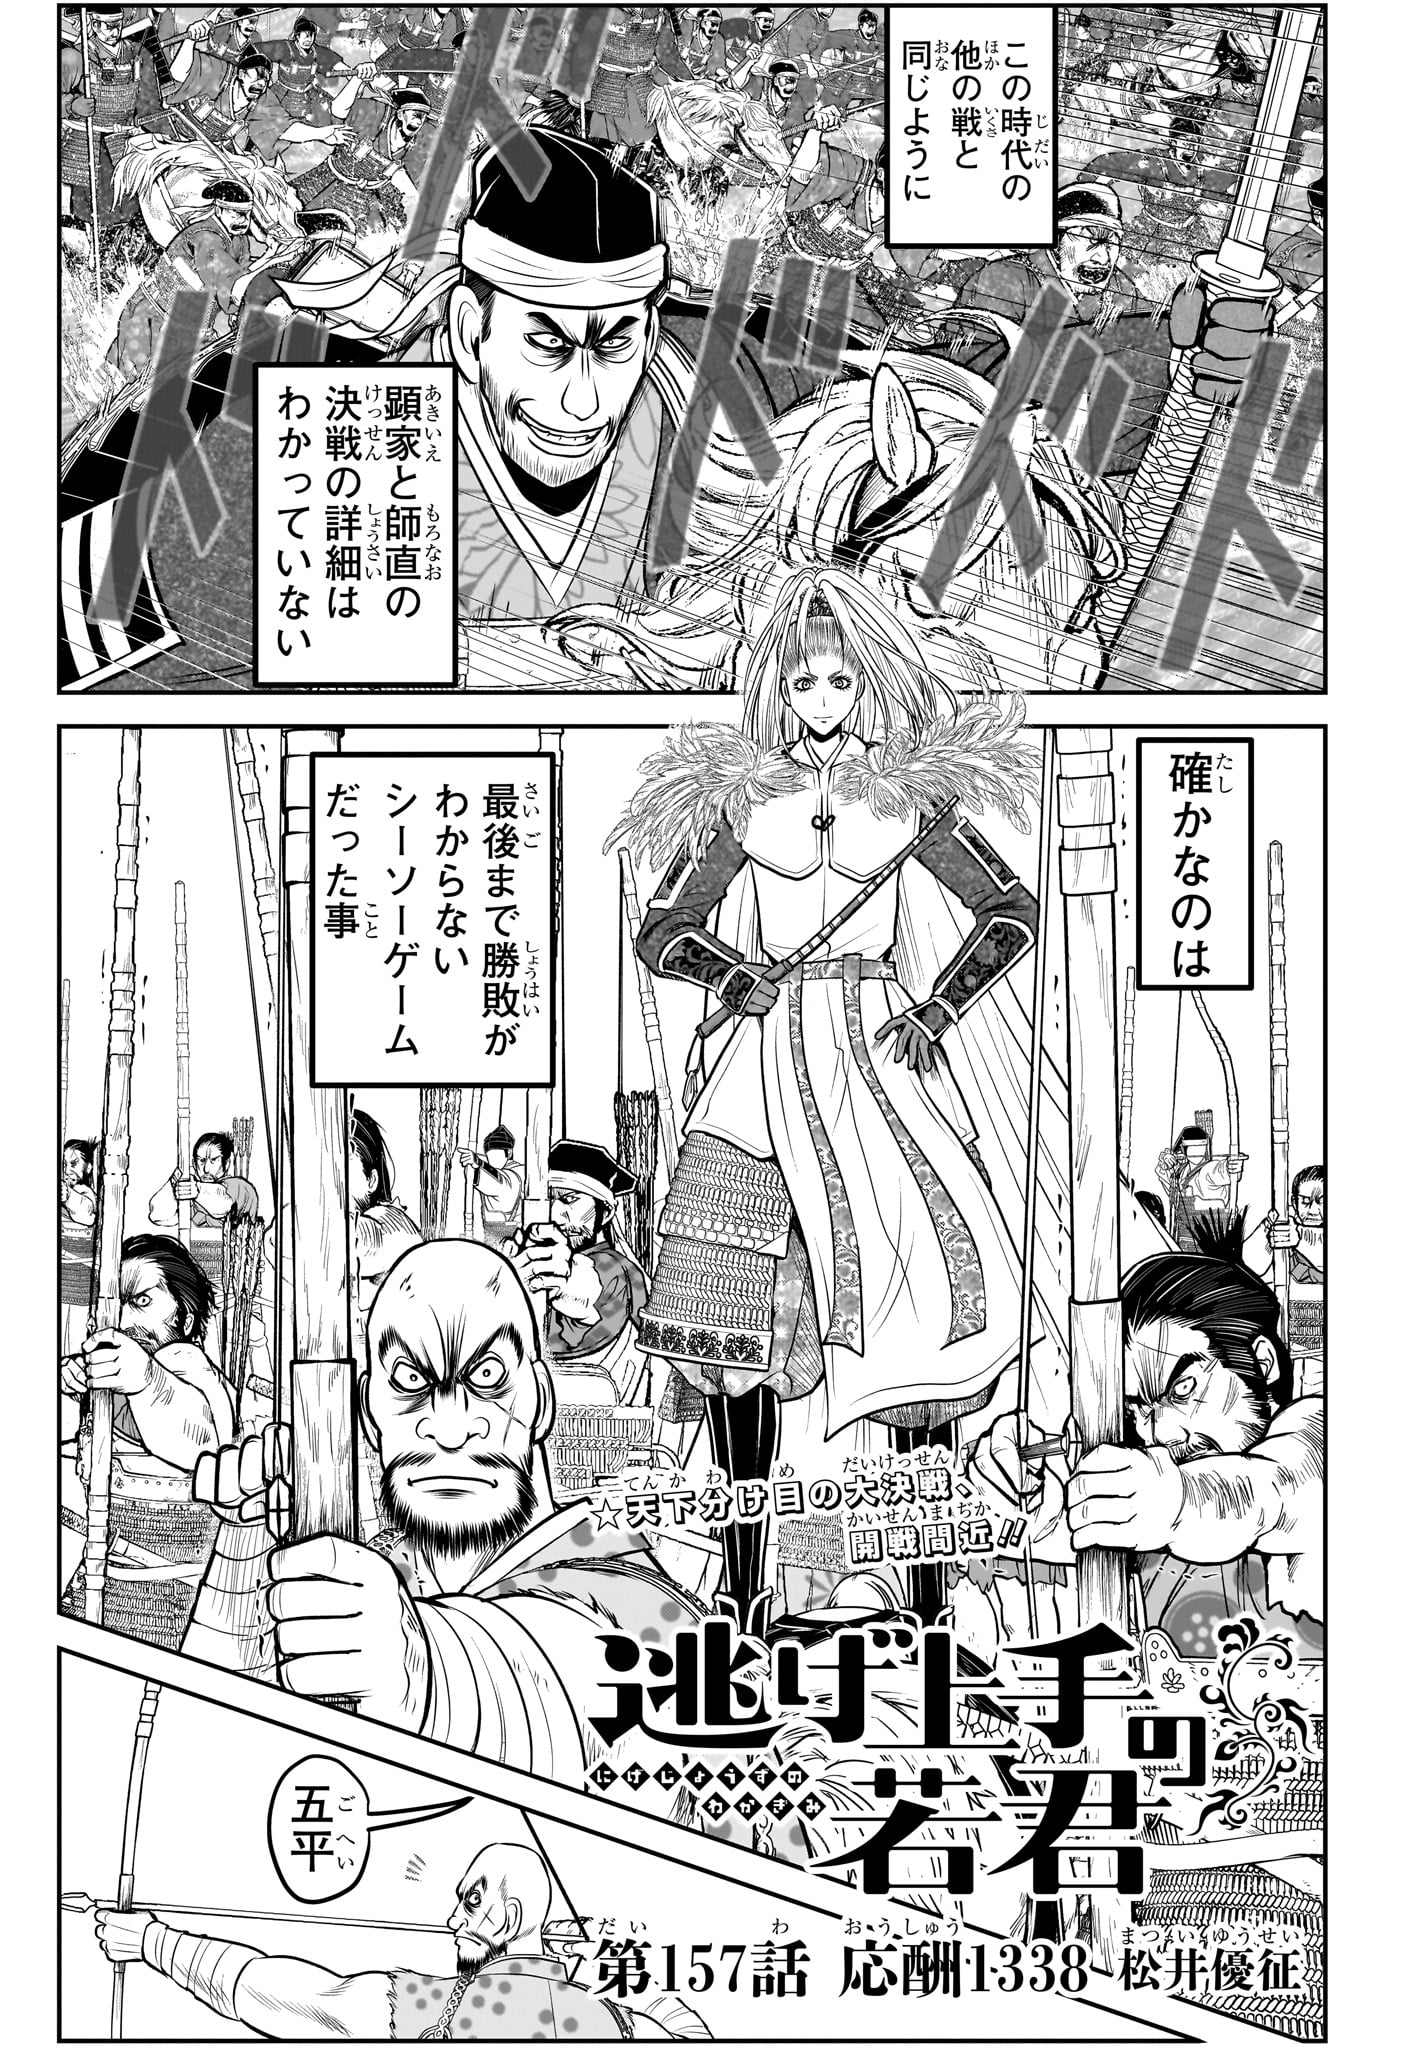 Nige Jouzu no Wakagimi - Chapter 157 - Page 1